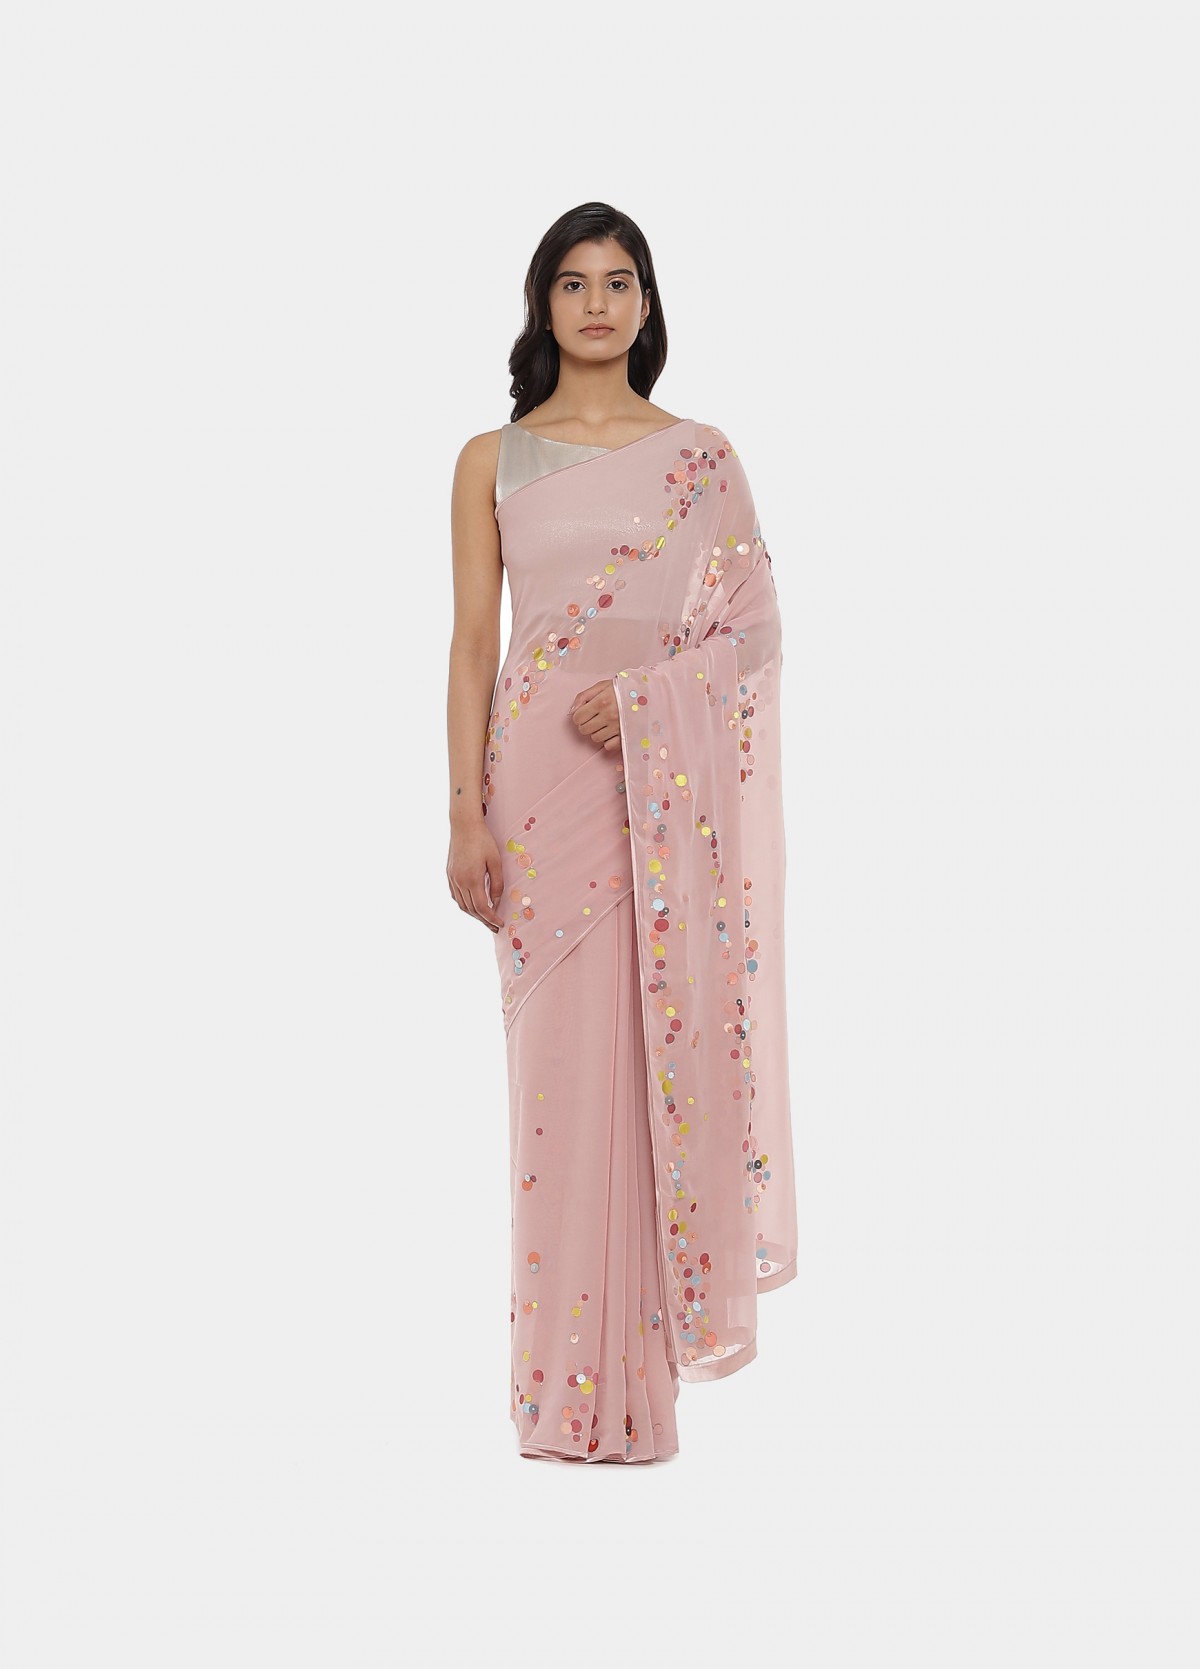 The Iridescent Sari